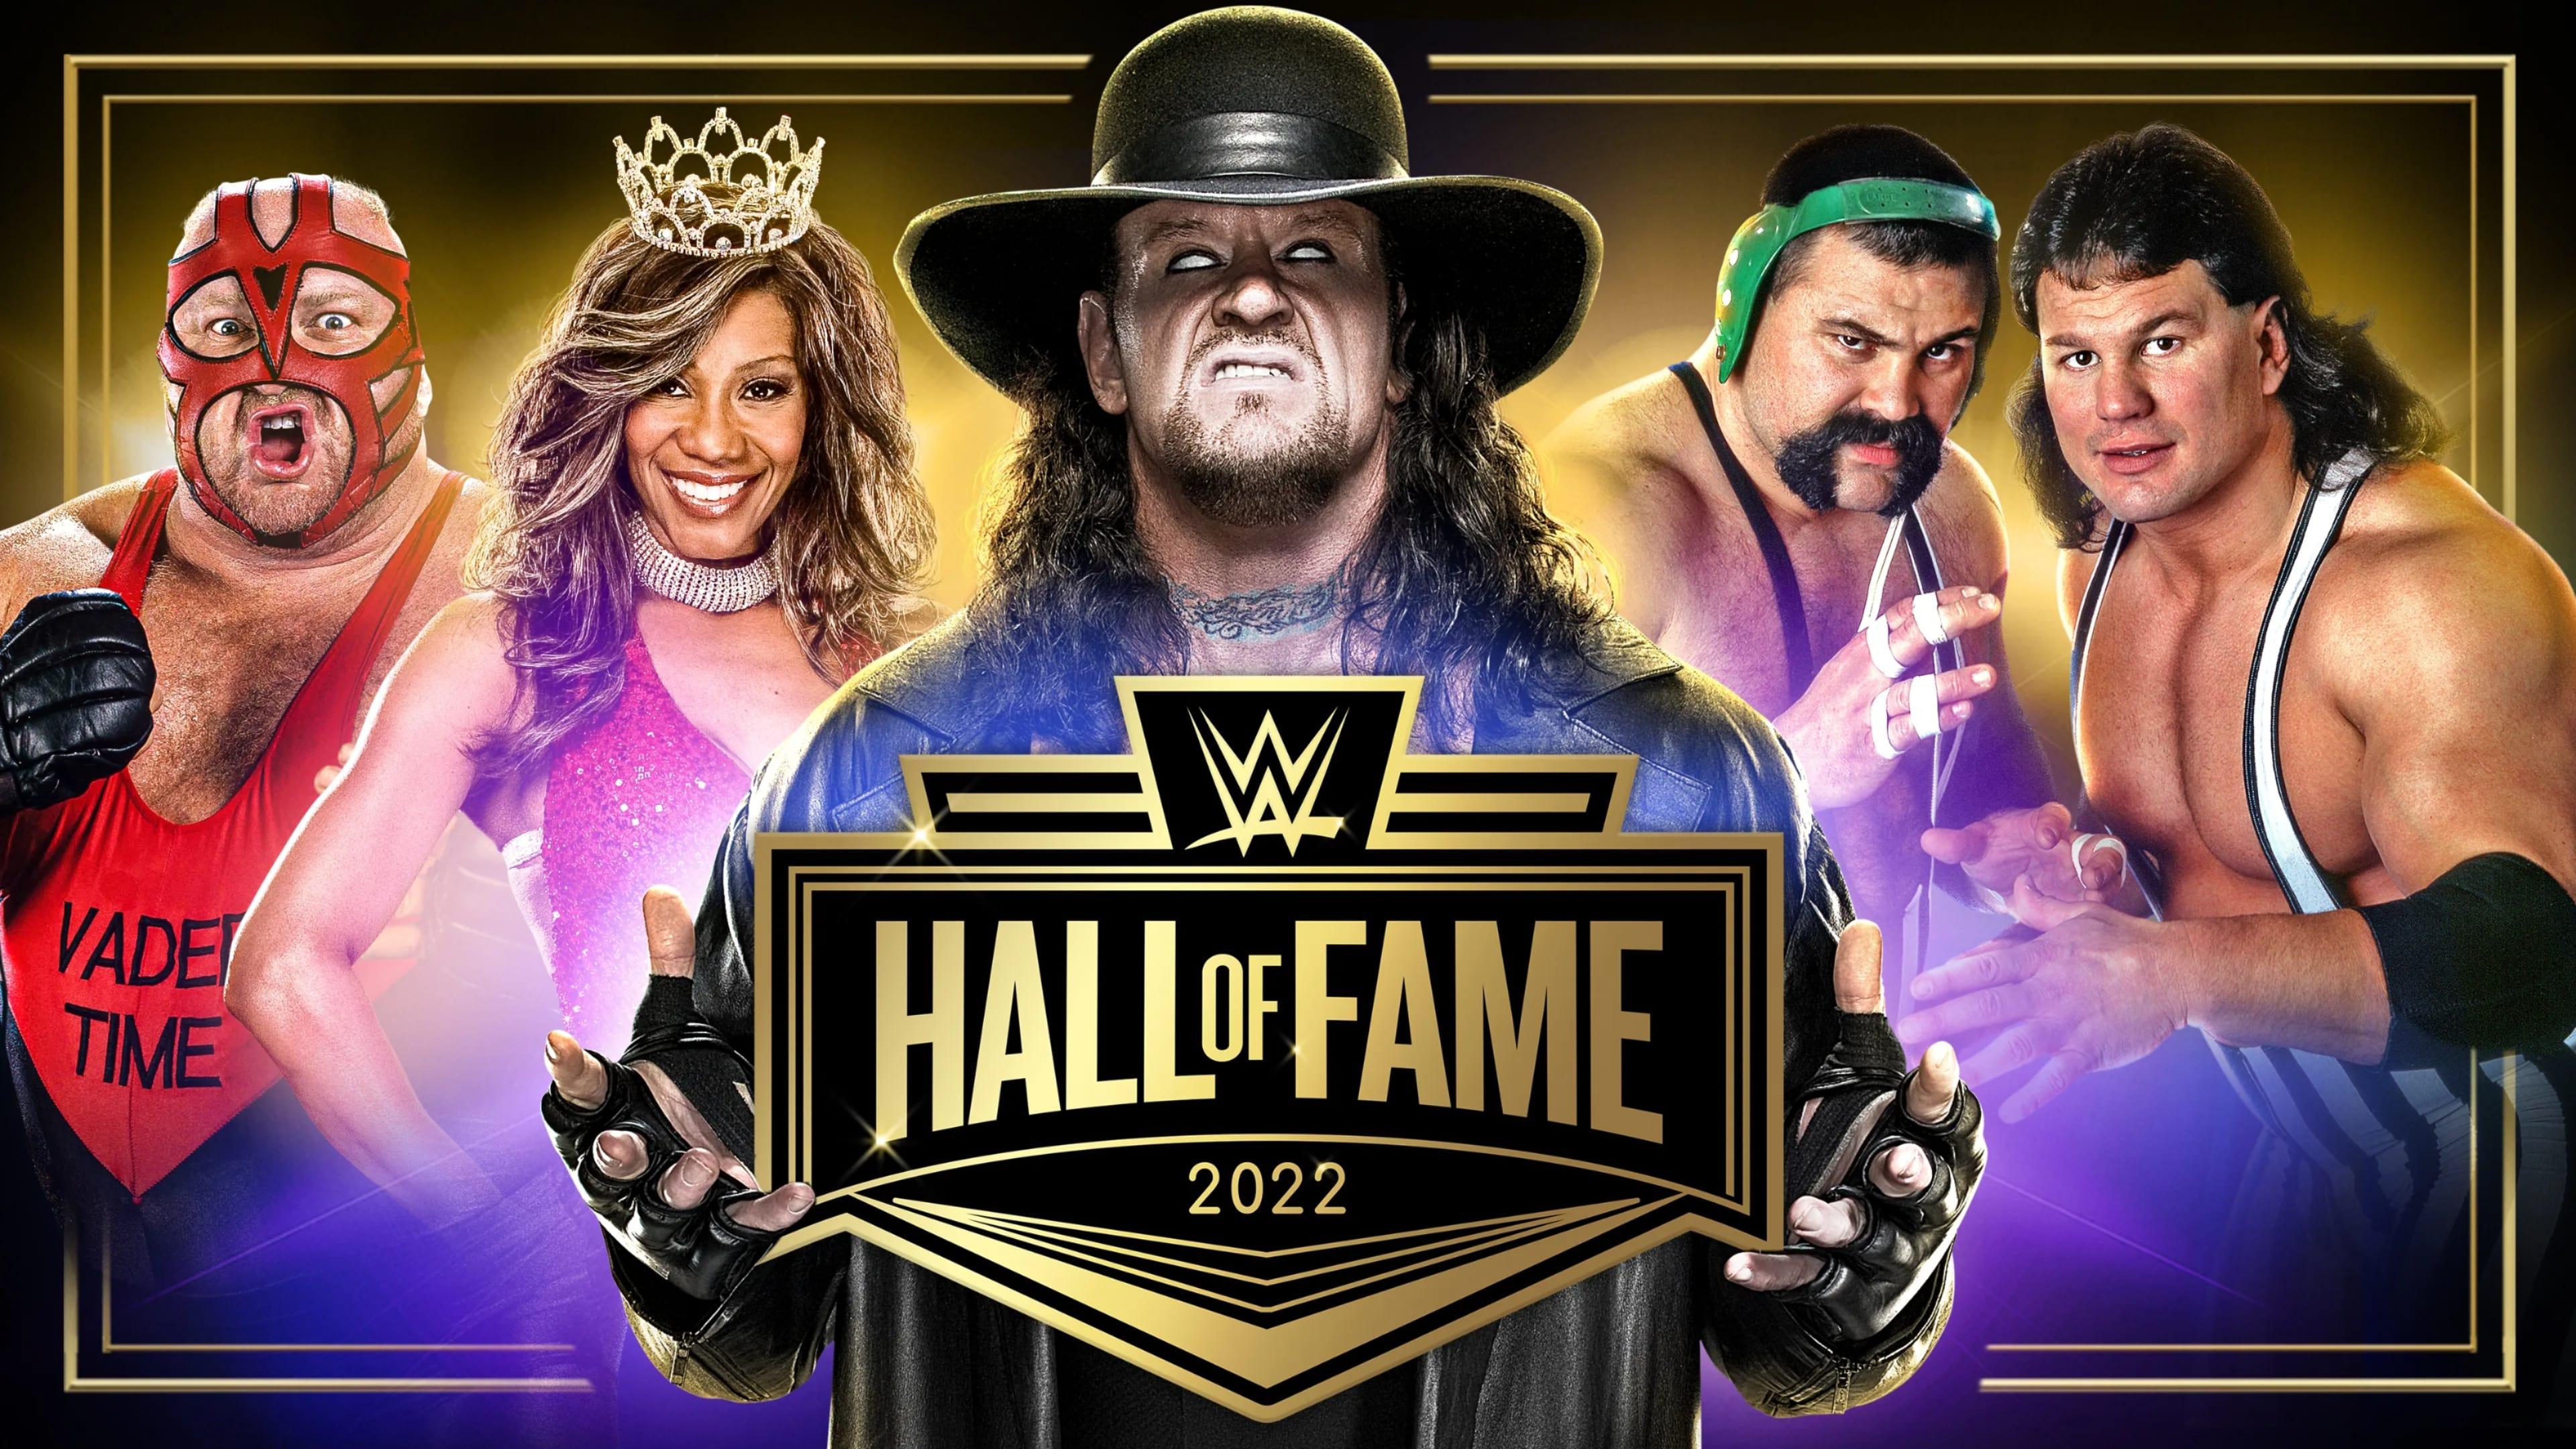 WWE Hall Of Fame 2022 backdrop